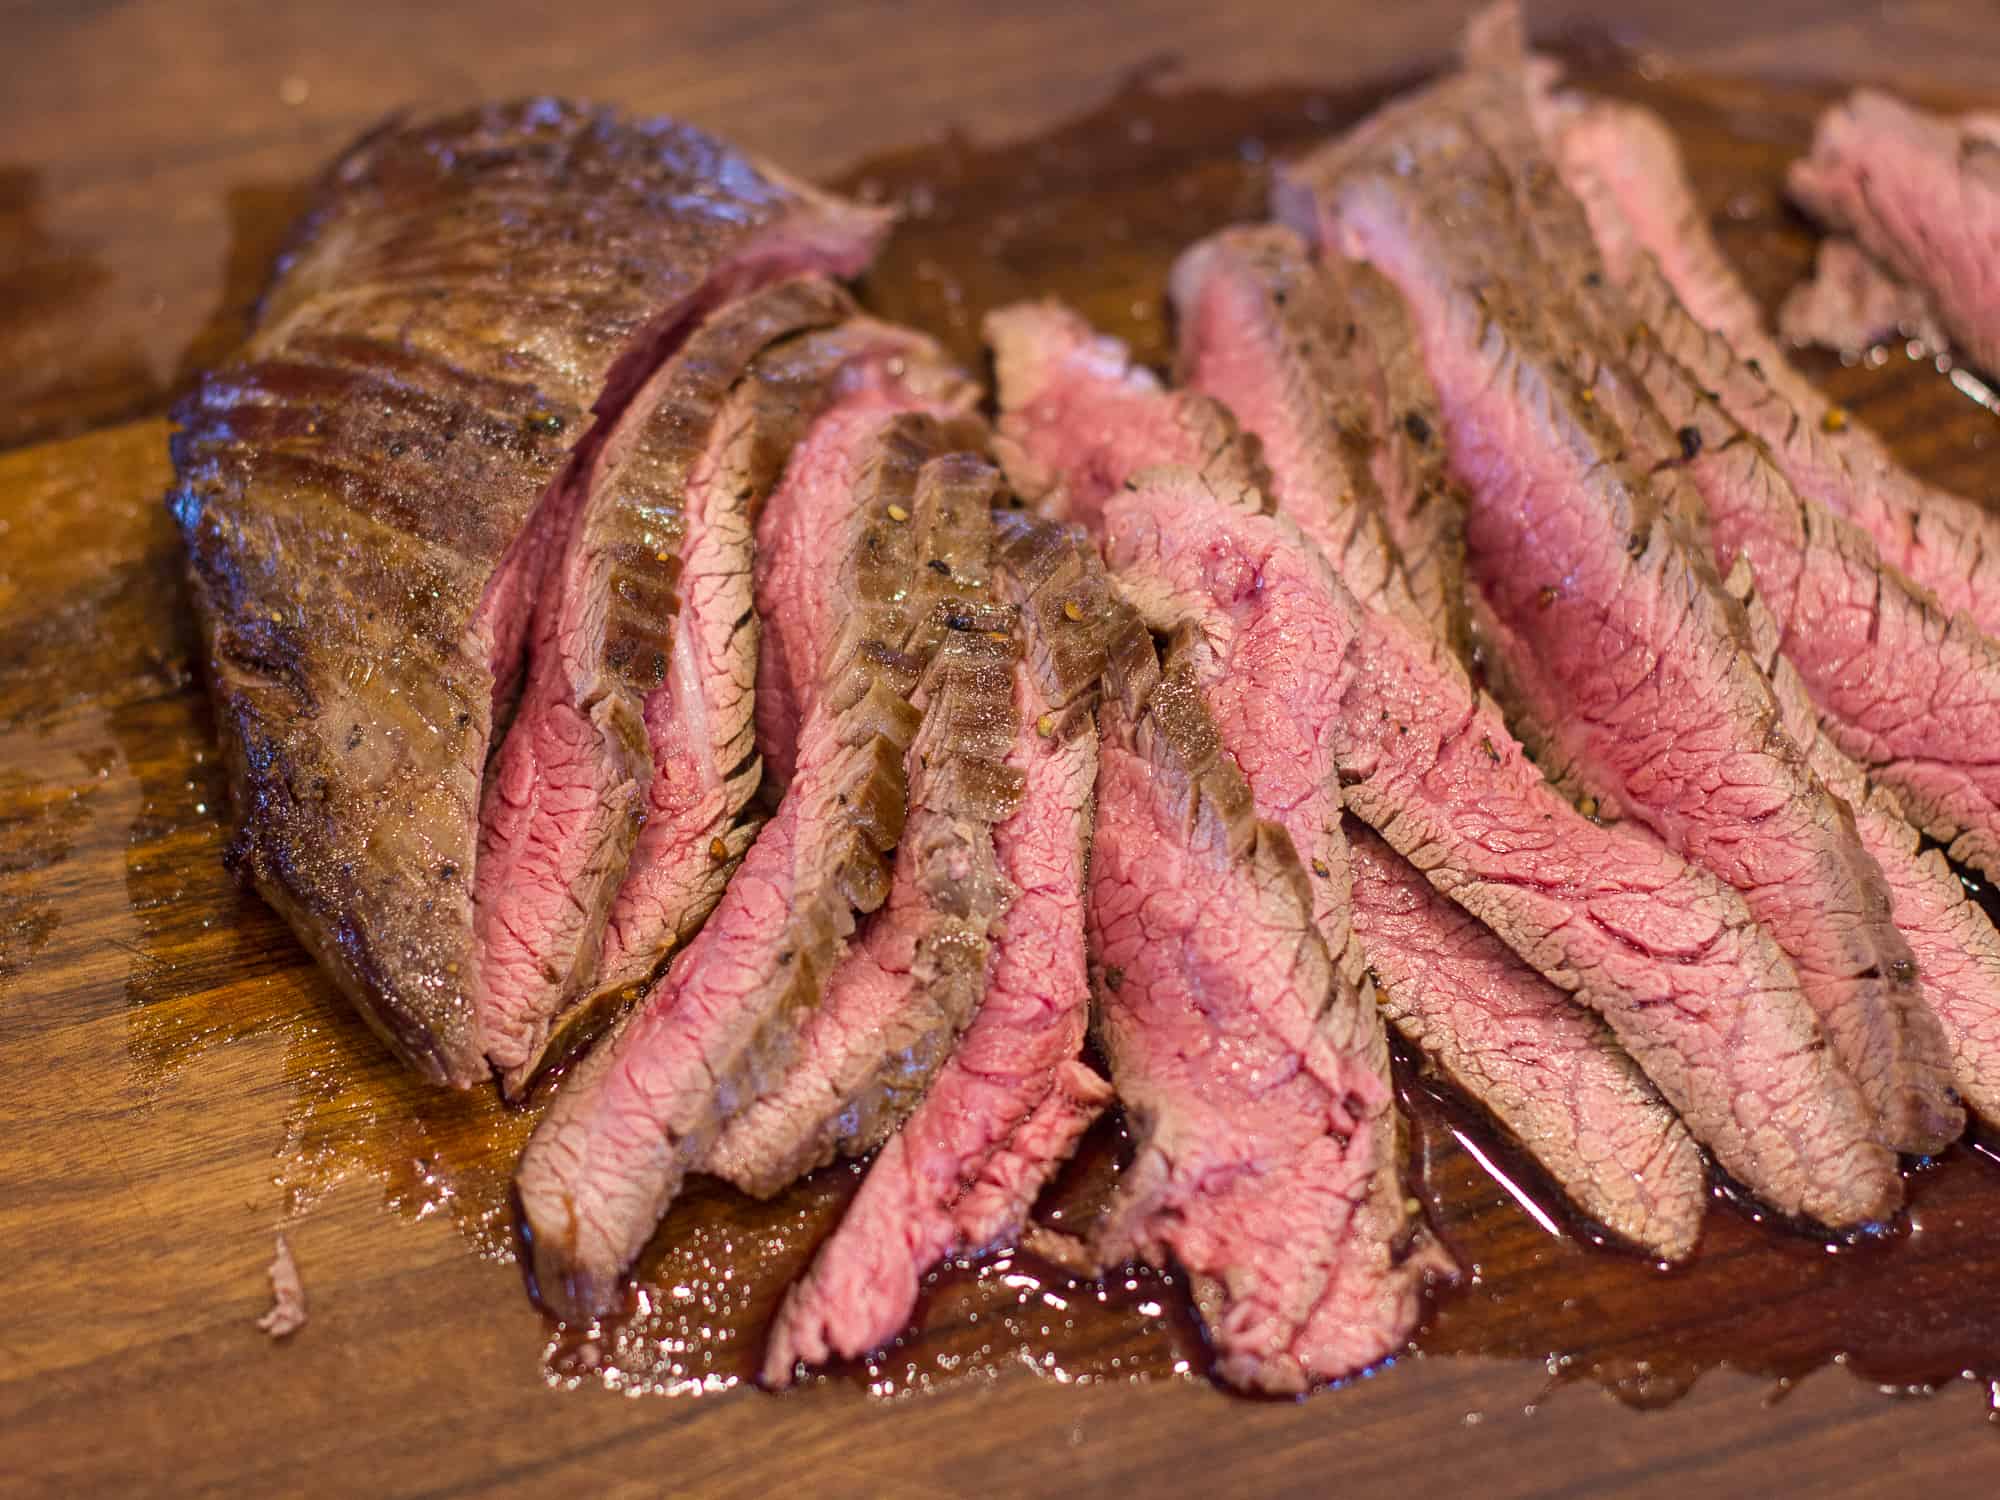 Pan Seared Flank Steak - Tastes of Homemade